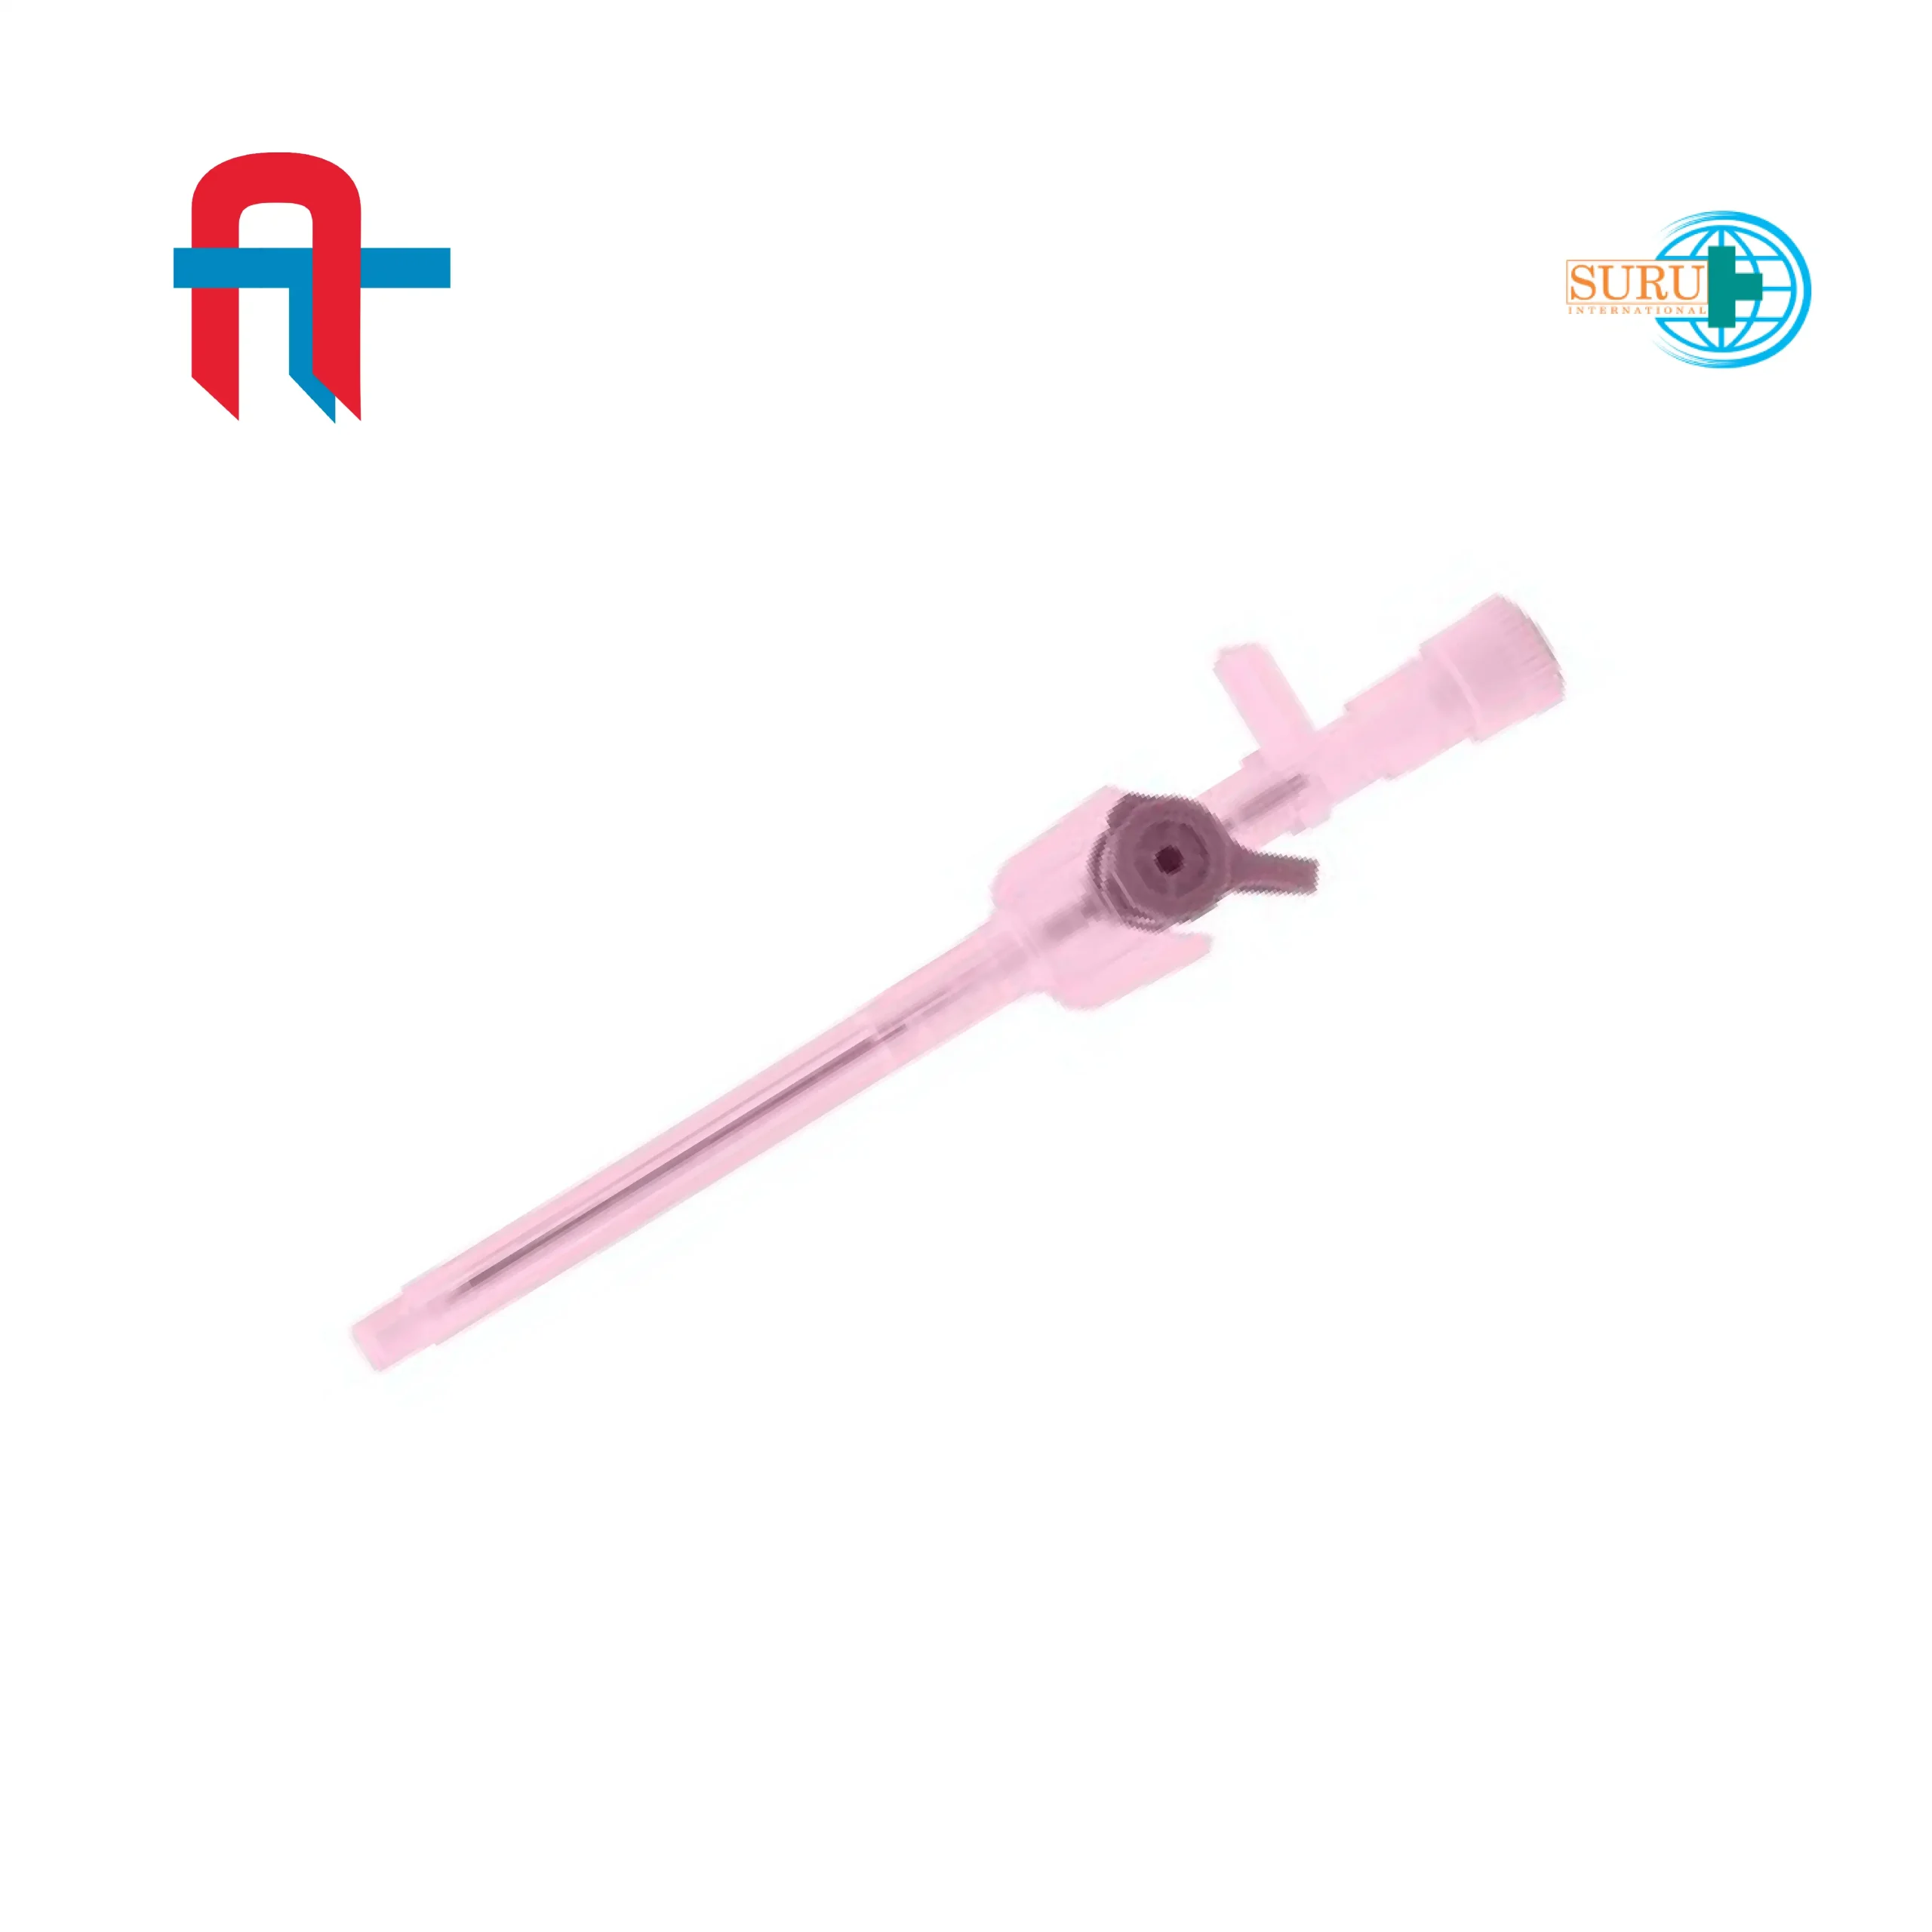 suruflon-20g-pink-angiocat